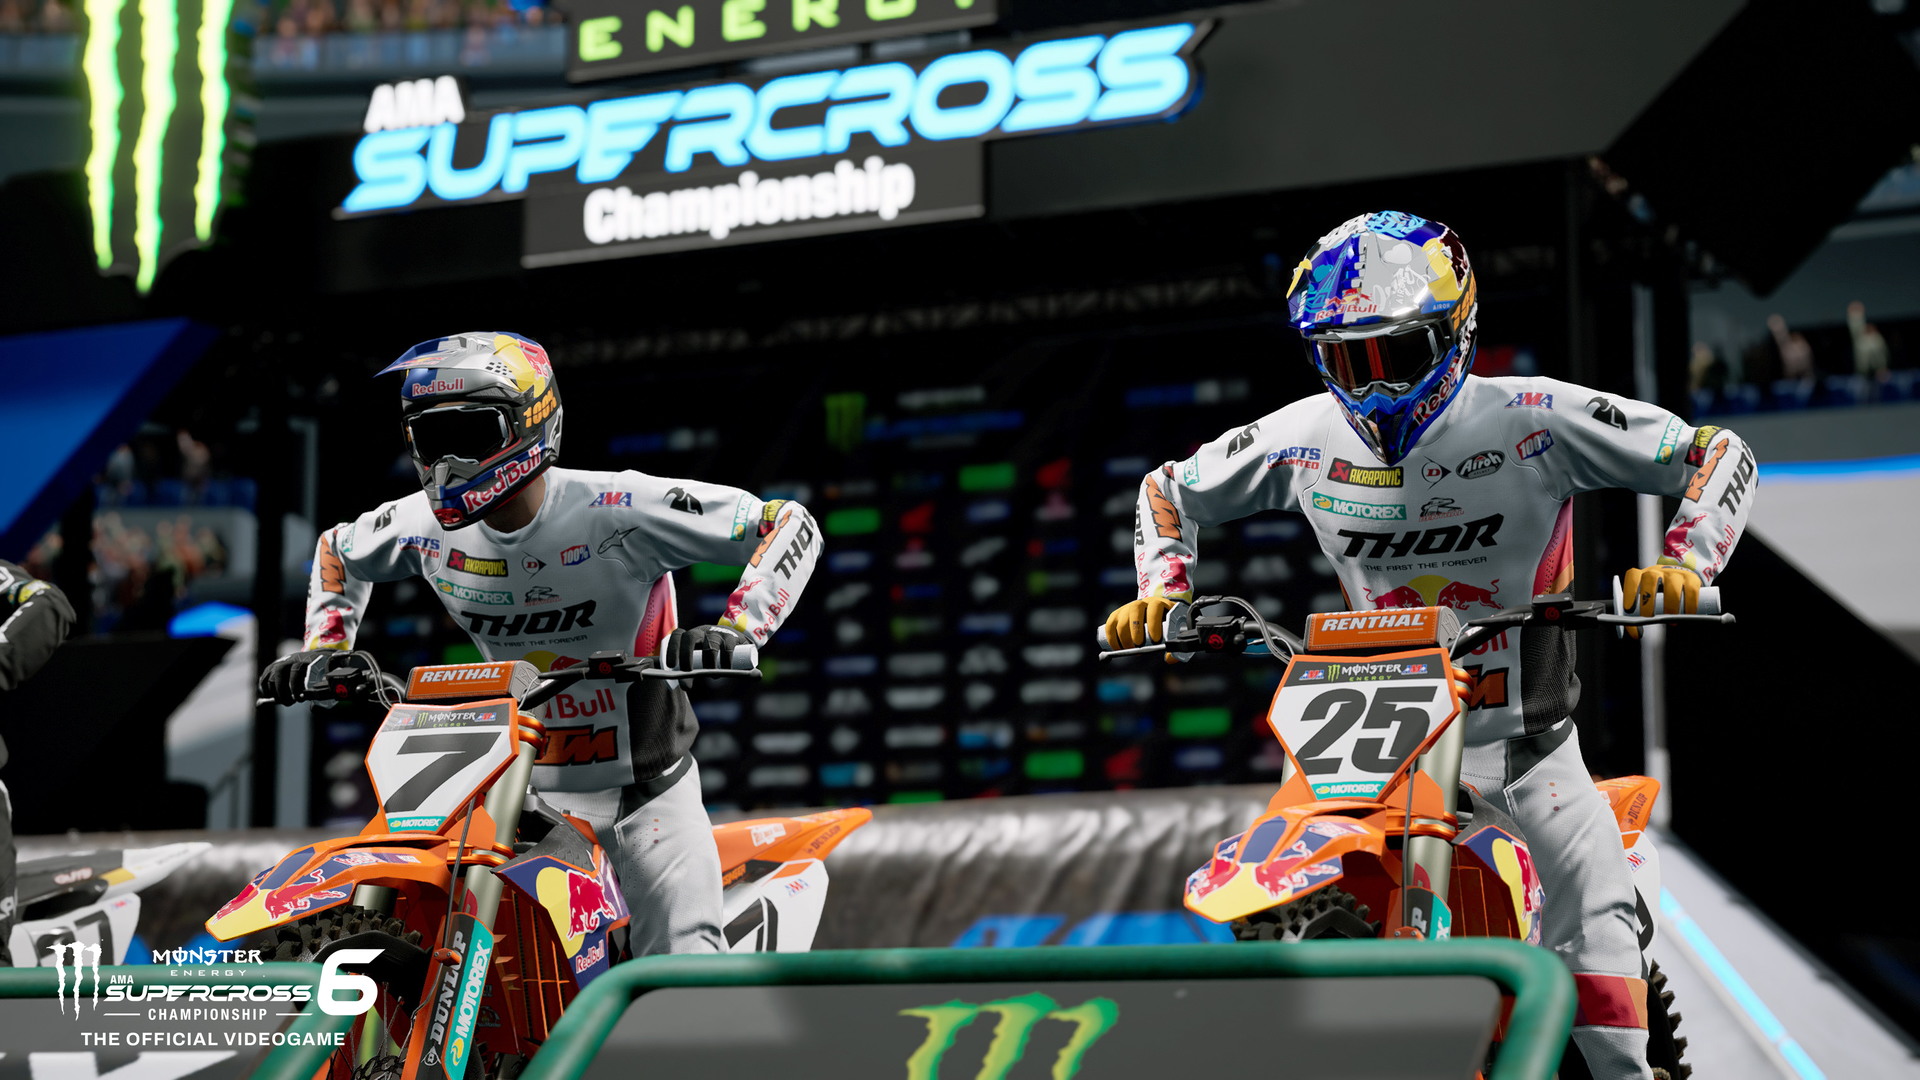 Monster Energy Supercross 6 - The Official Videogame - screenshot 15